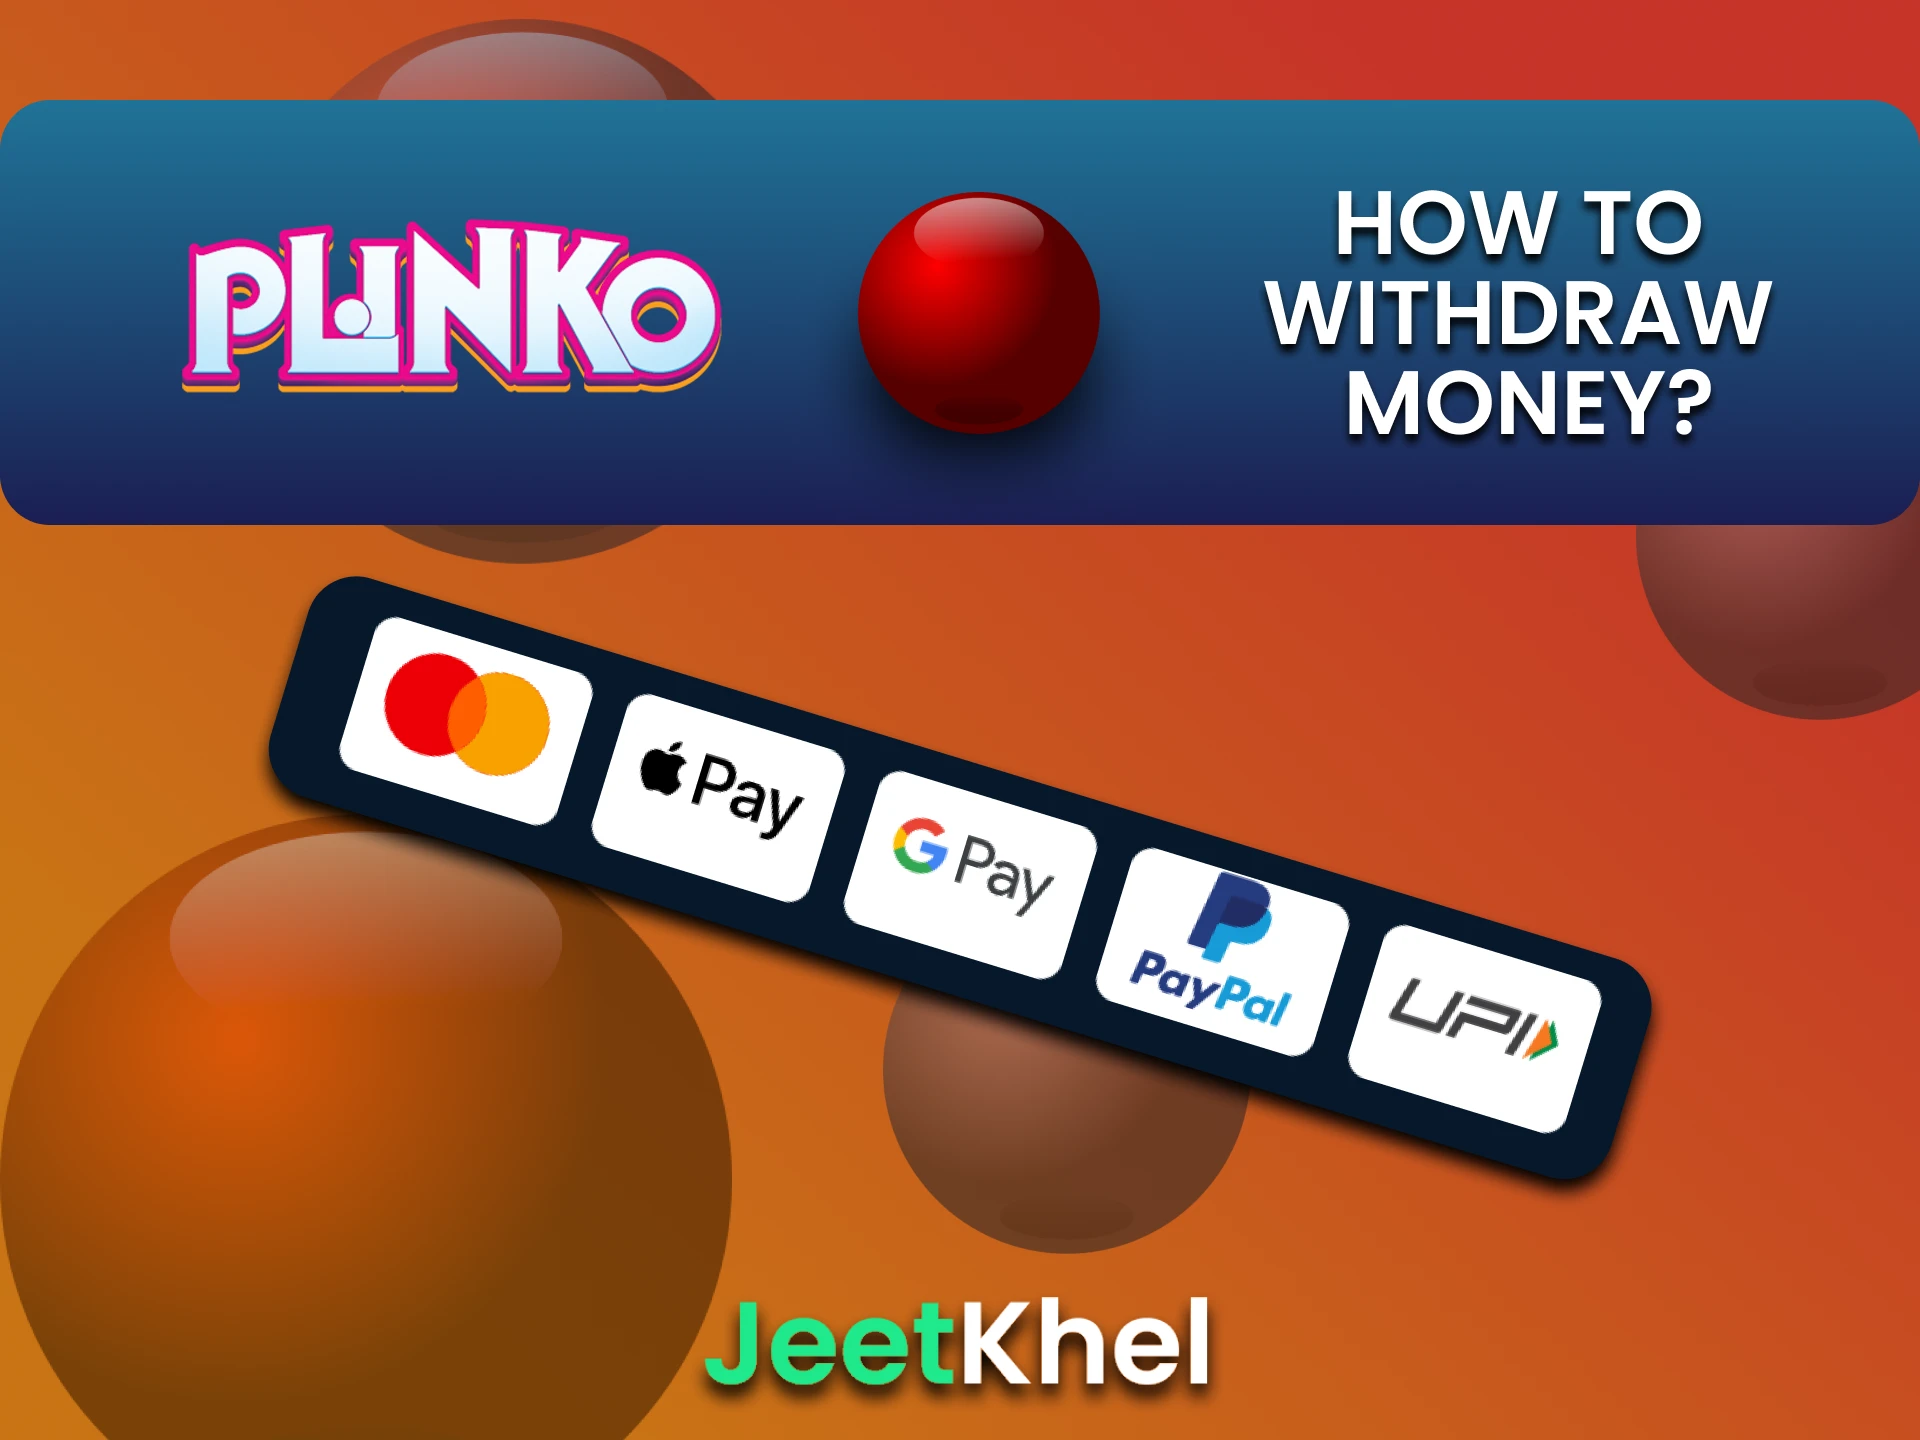 Choose a convenient withdrawal method for Plinko on JeetKhel.